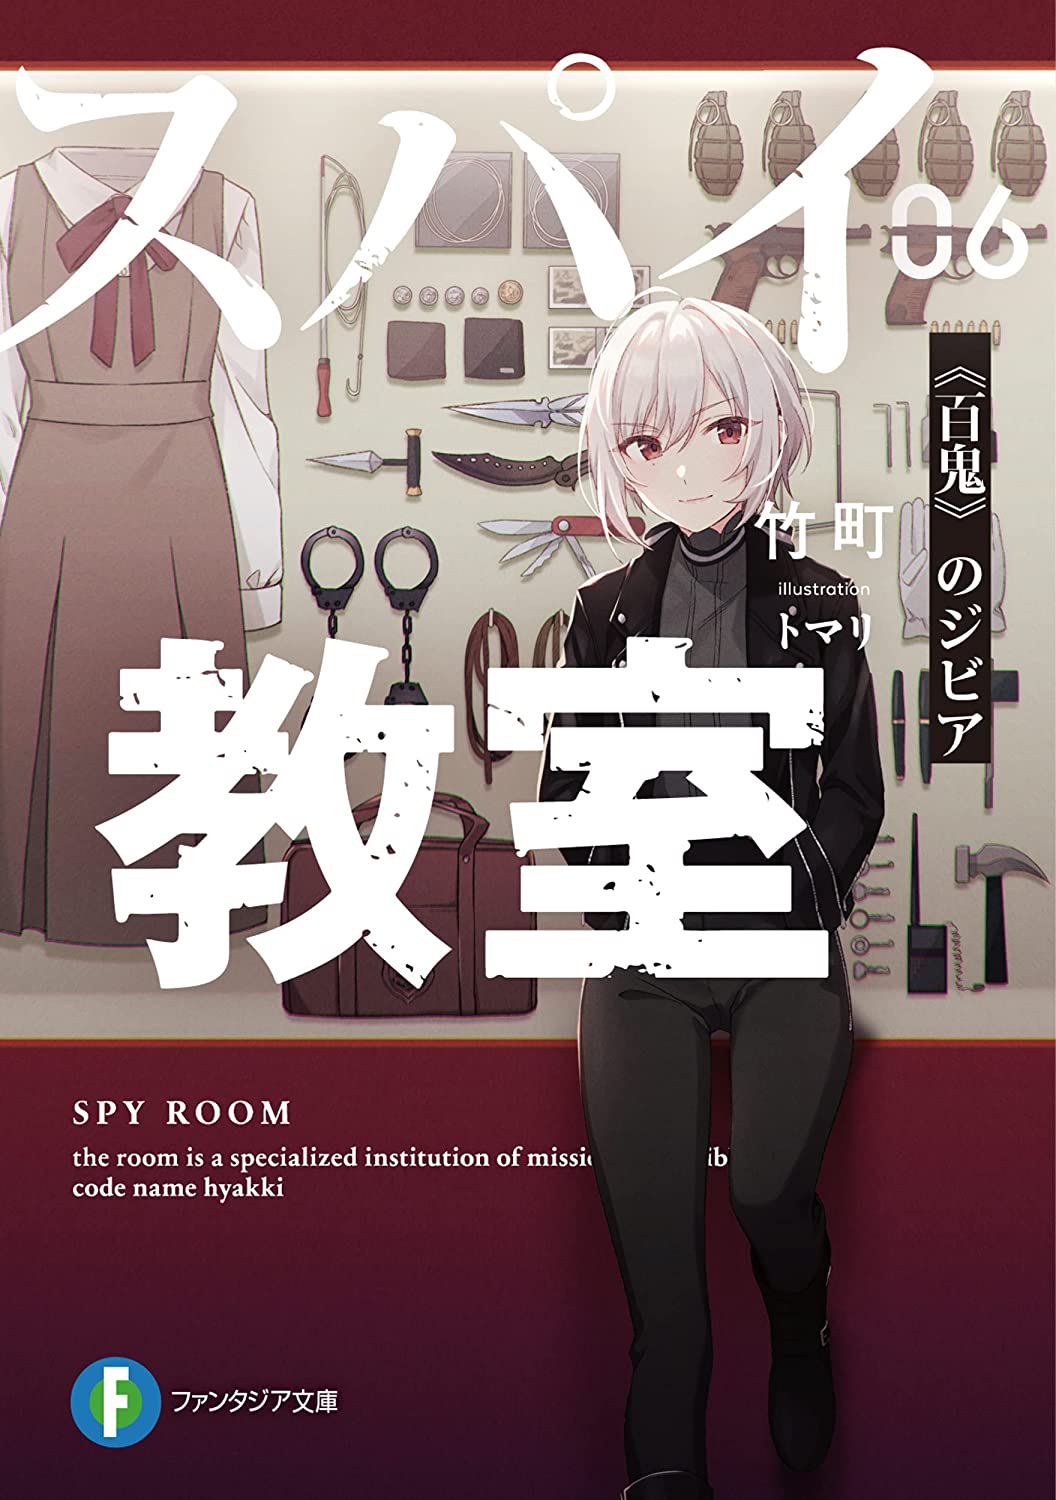 Manga Mogura RE on X: Light Novel Series Spy kyoushitsu (Spy Classroom)  by Takemachi, Tomari has 1.1 million copies (including manga, spin-off,  digital) in circulation.  / X